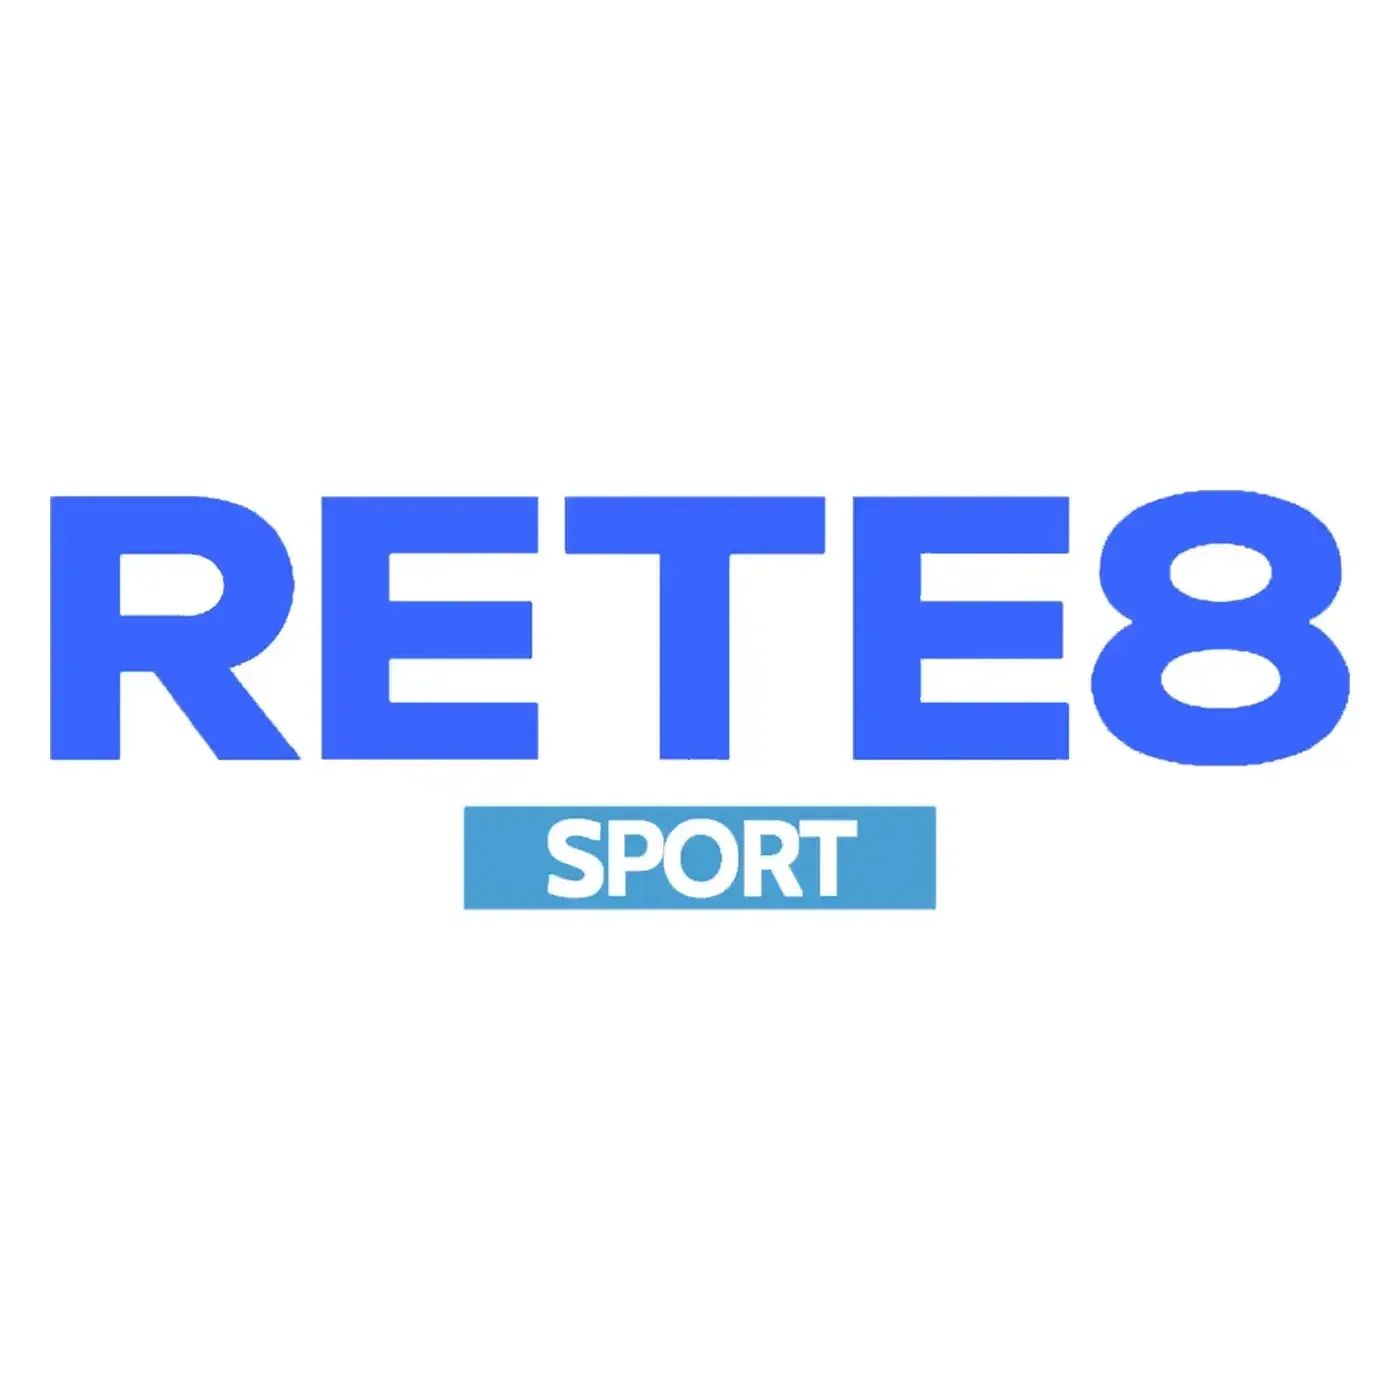 Rete 8 Sport TV